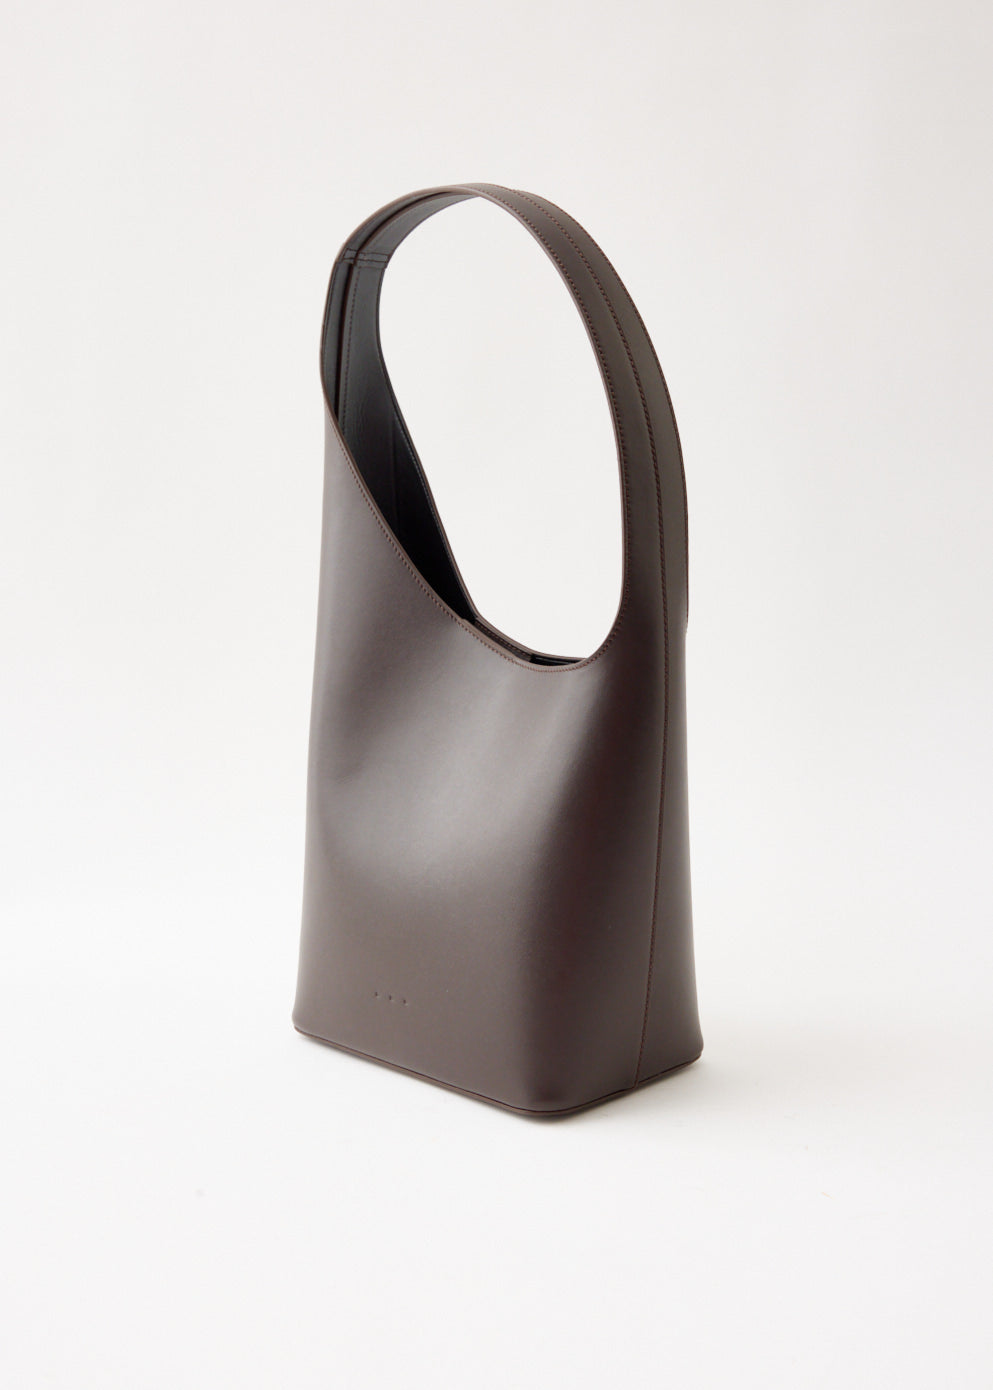 The Demi Lune shopper aka the perfect bag. Thank you @aesther_ekme